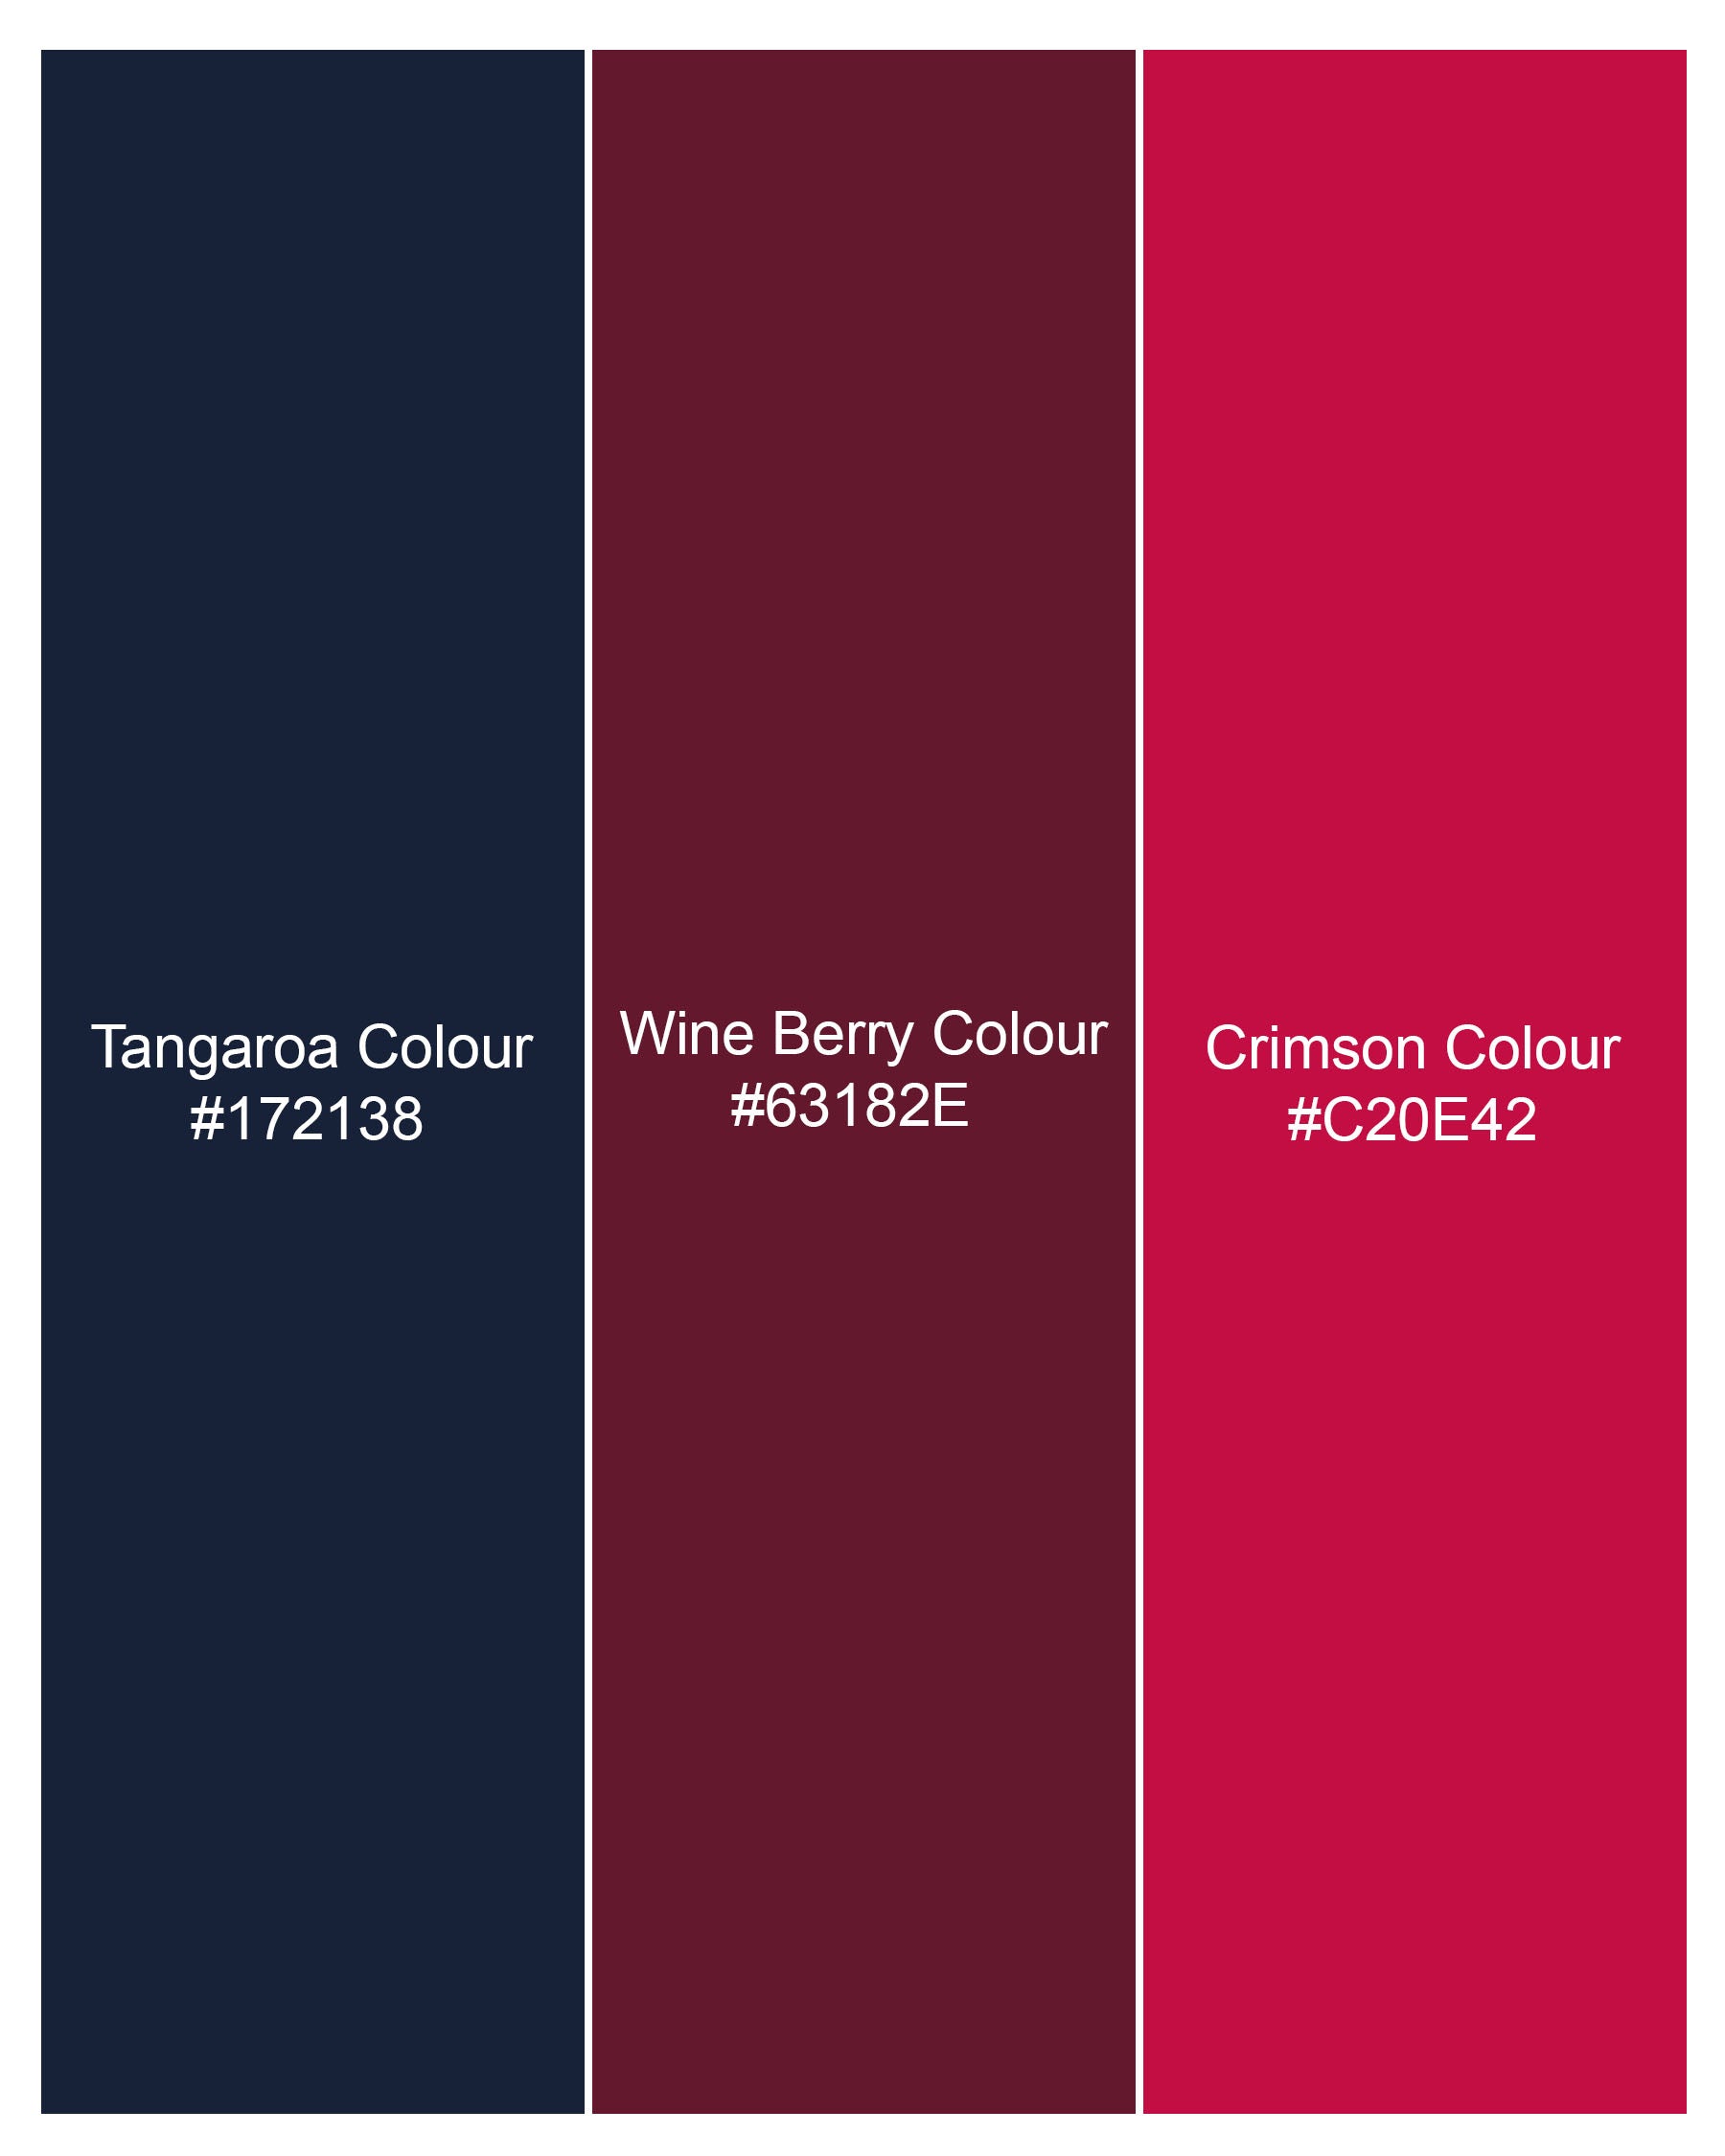 Wineberry With Tangaroa Navy Blue Plaid and Striped Twill Premium Cotton Designer Shirt 7942-P125-38,7942-P125-H-38,7942-P125-39,7942-P125-H-39,7942-P125-40,7942-P125-H-40,7942-P125-42,7942-P125-H-42,7942-P125-44,7942-P125-H-44,7942-P125-46,7942-P125-H-46,7942-P125-48,7942-P125-H-48,7942-P125-50,7942-P125-H-50,7942-P125-52,7942-P125-H-52